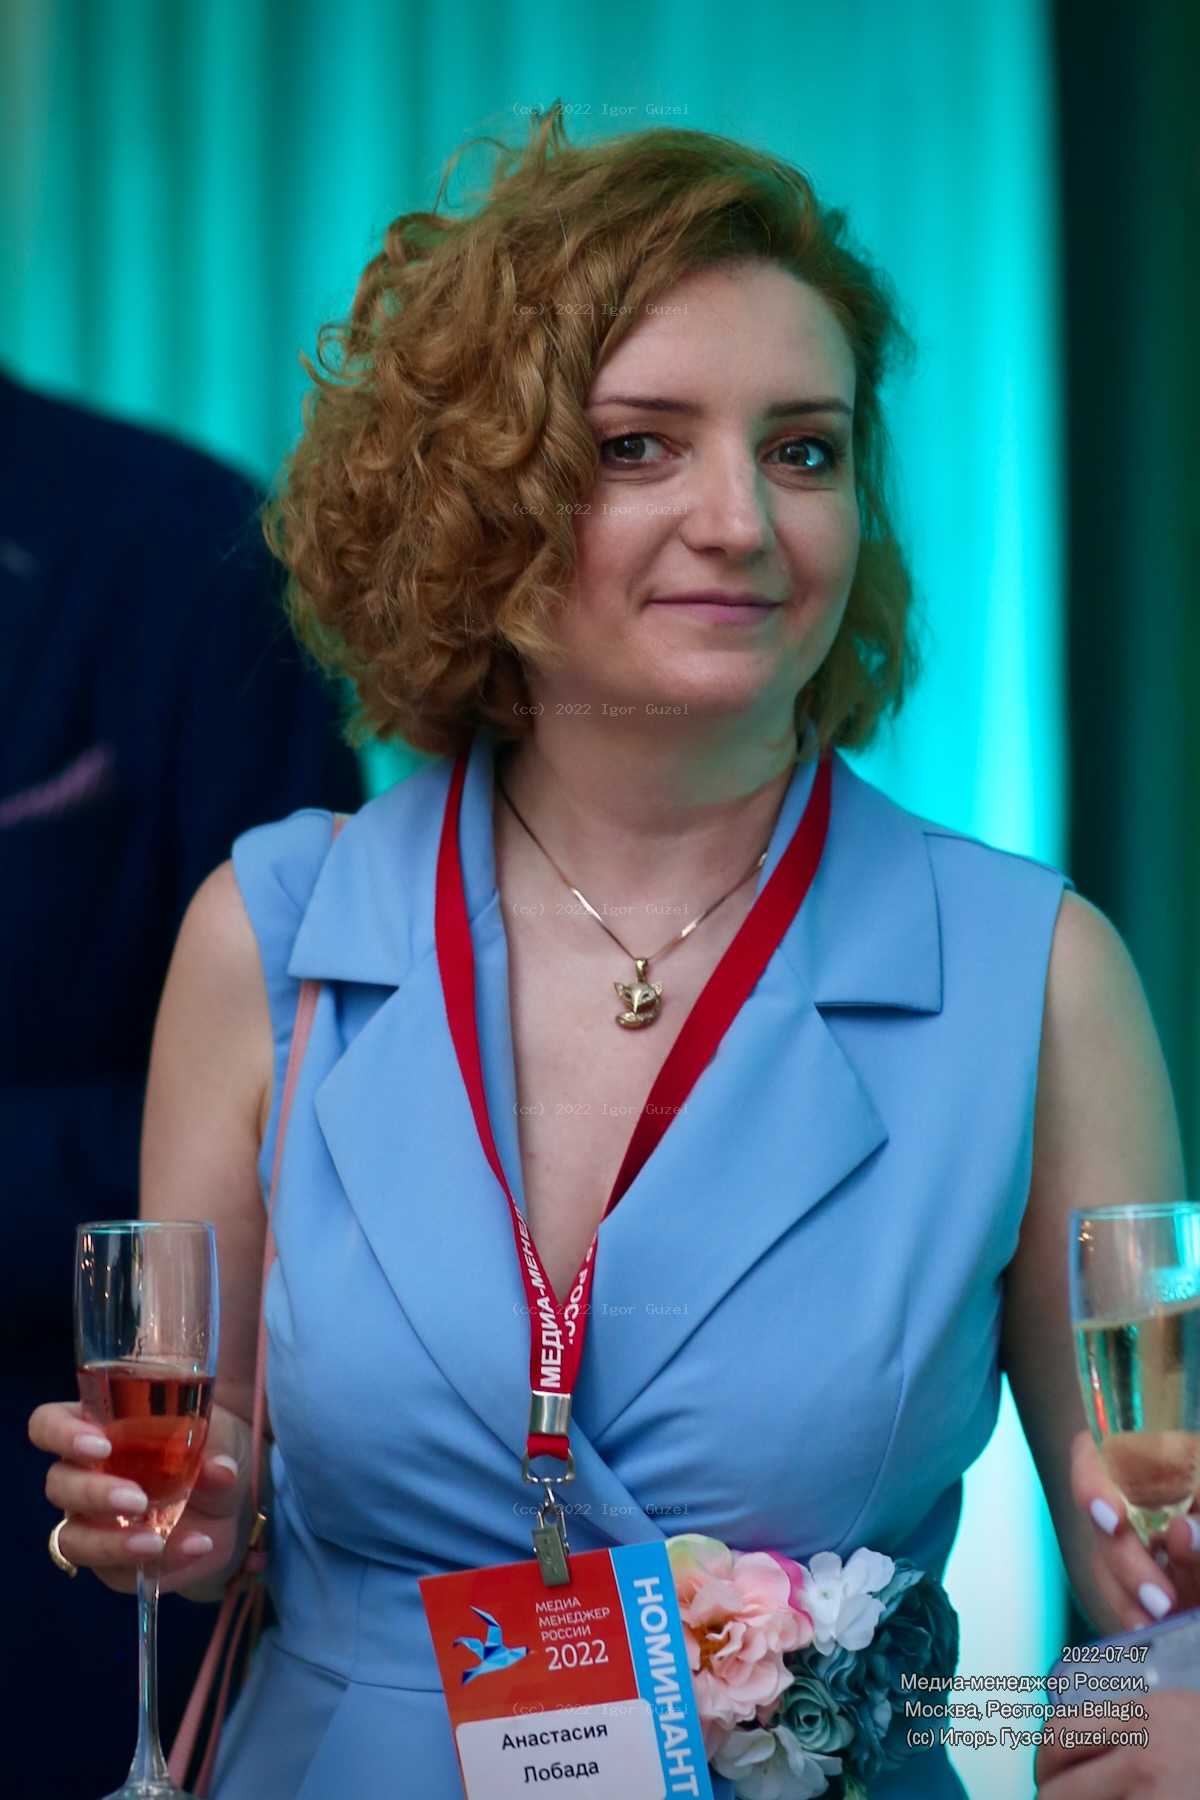 Анастасия Лобада - Медиа-Менеджер России 2022 (Москва, ресторан Belladgio) 2022-07-07 20:07:58